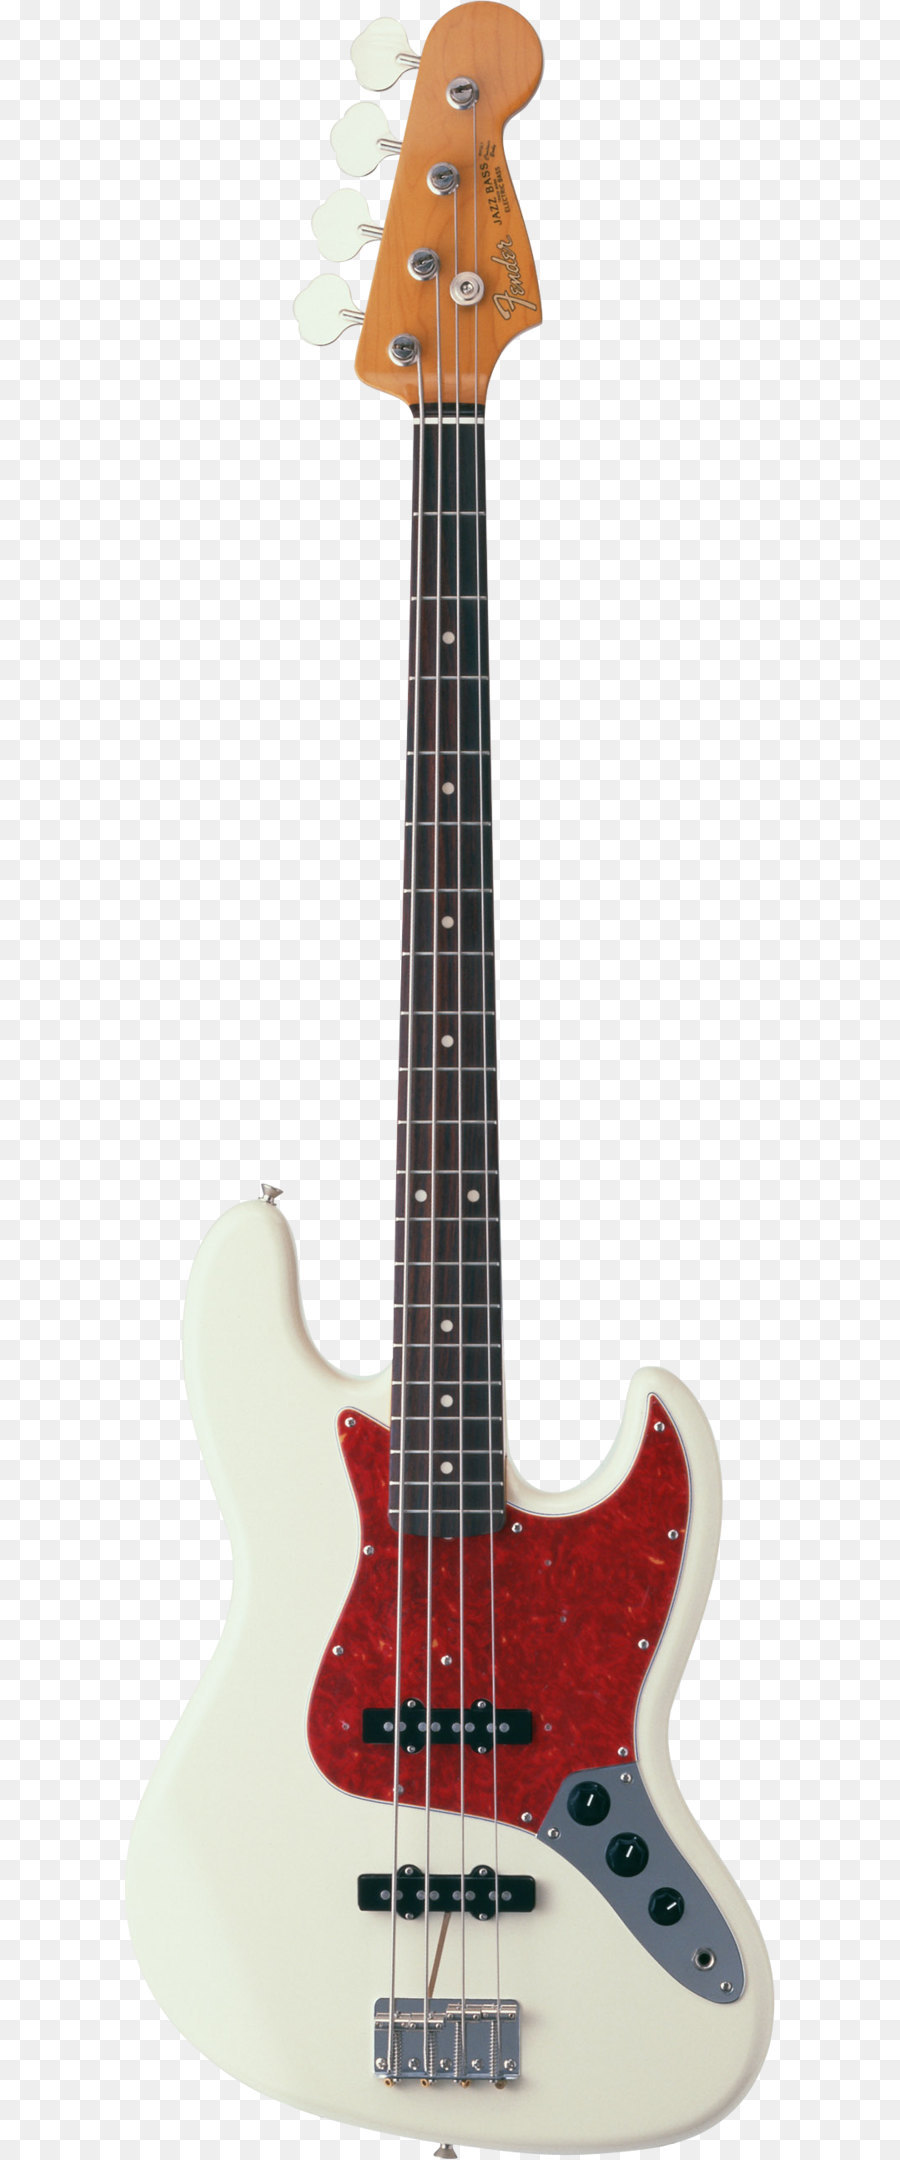 Fender chính Xác Bass, Fender Jaguar, Fender thay thế Bass Fender Jazz Bass - Guitar điện PNG